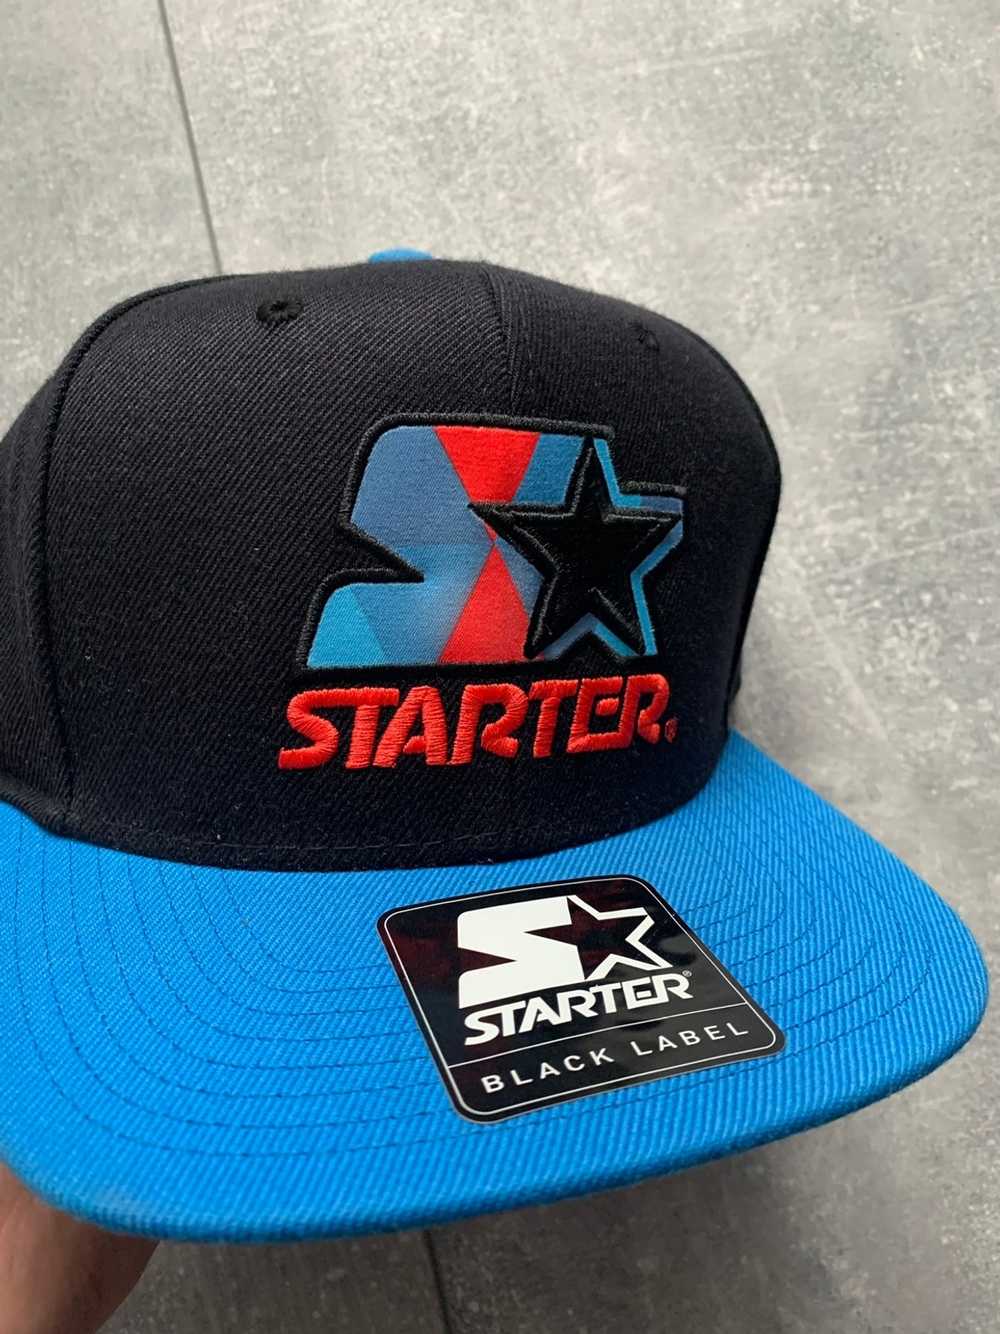 Frontlinie Starter Starter Black label cap Gem new 